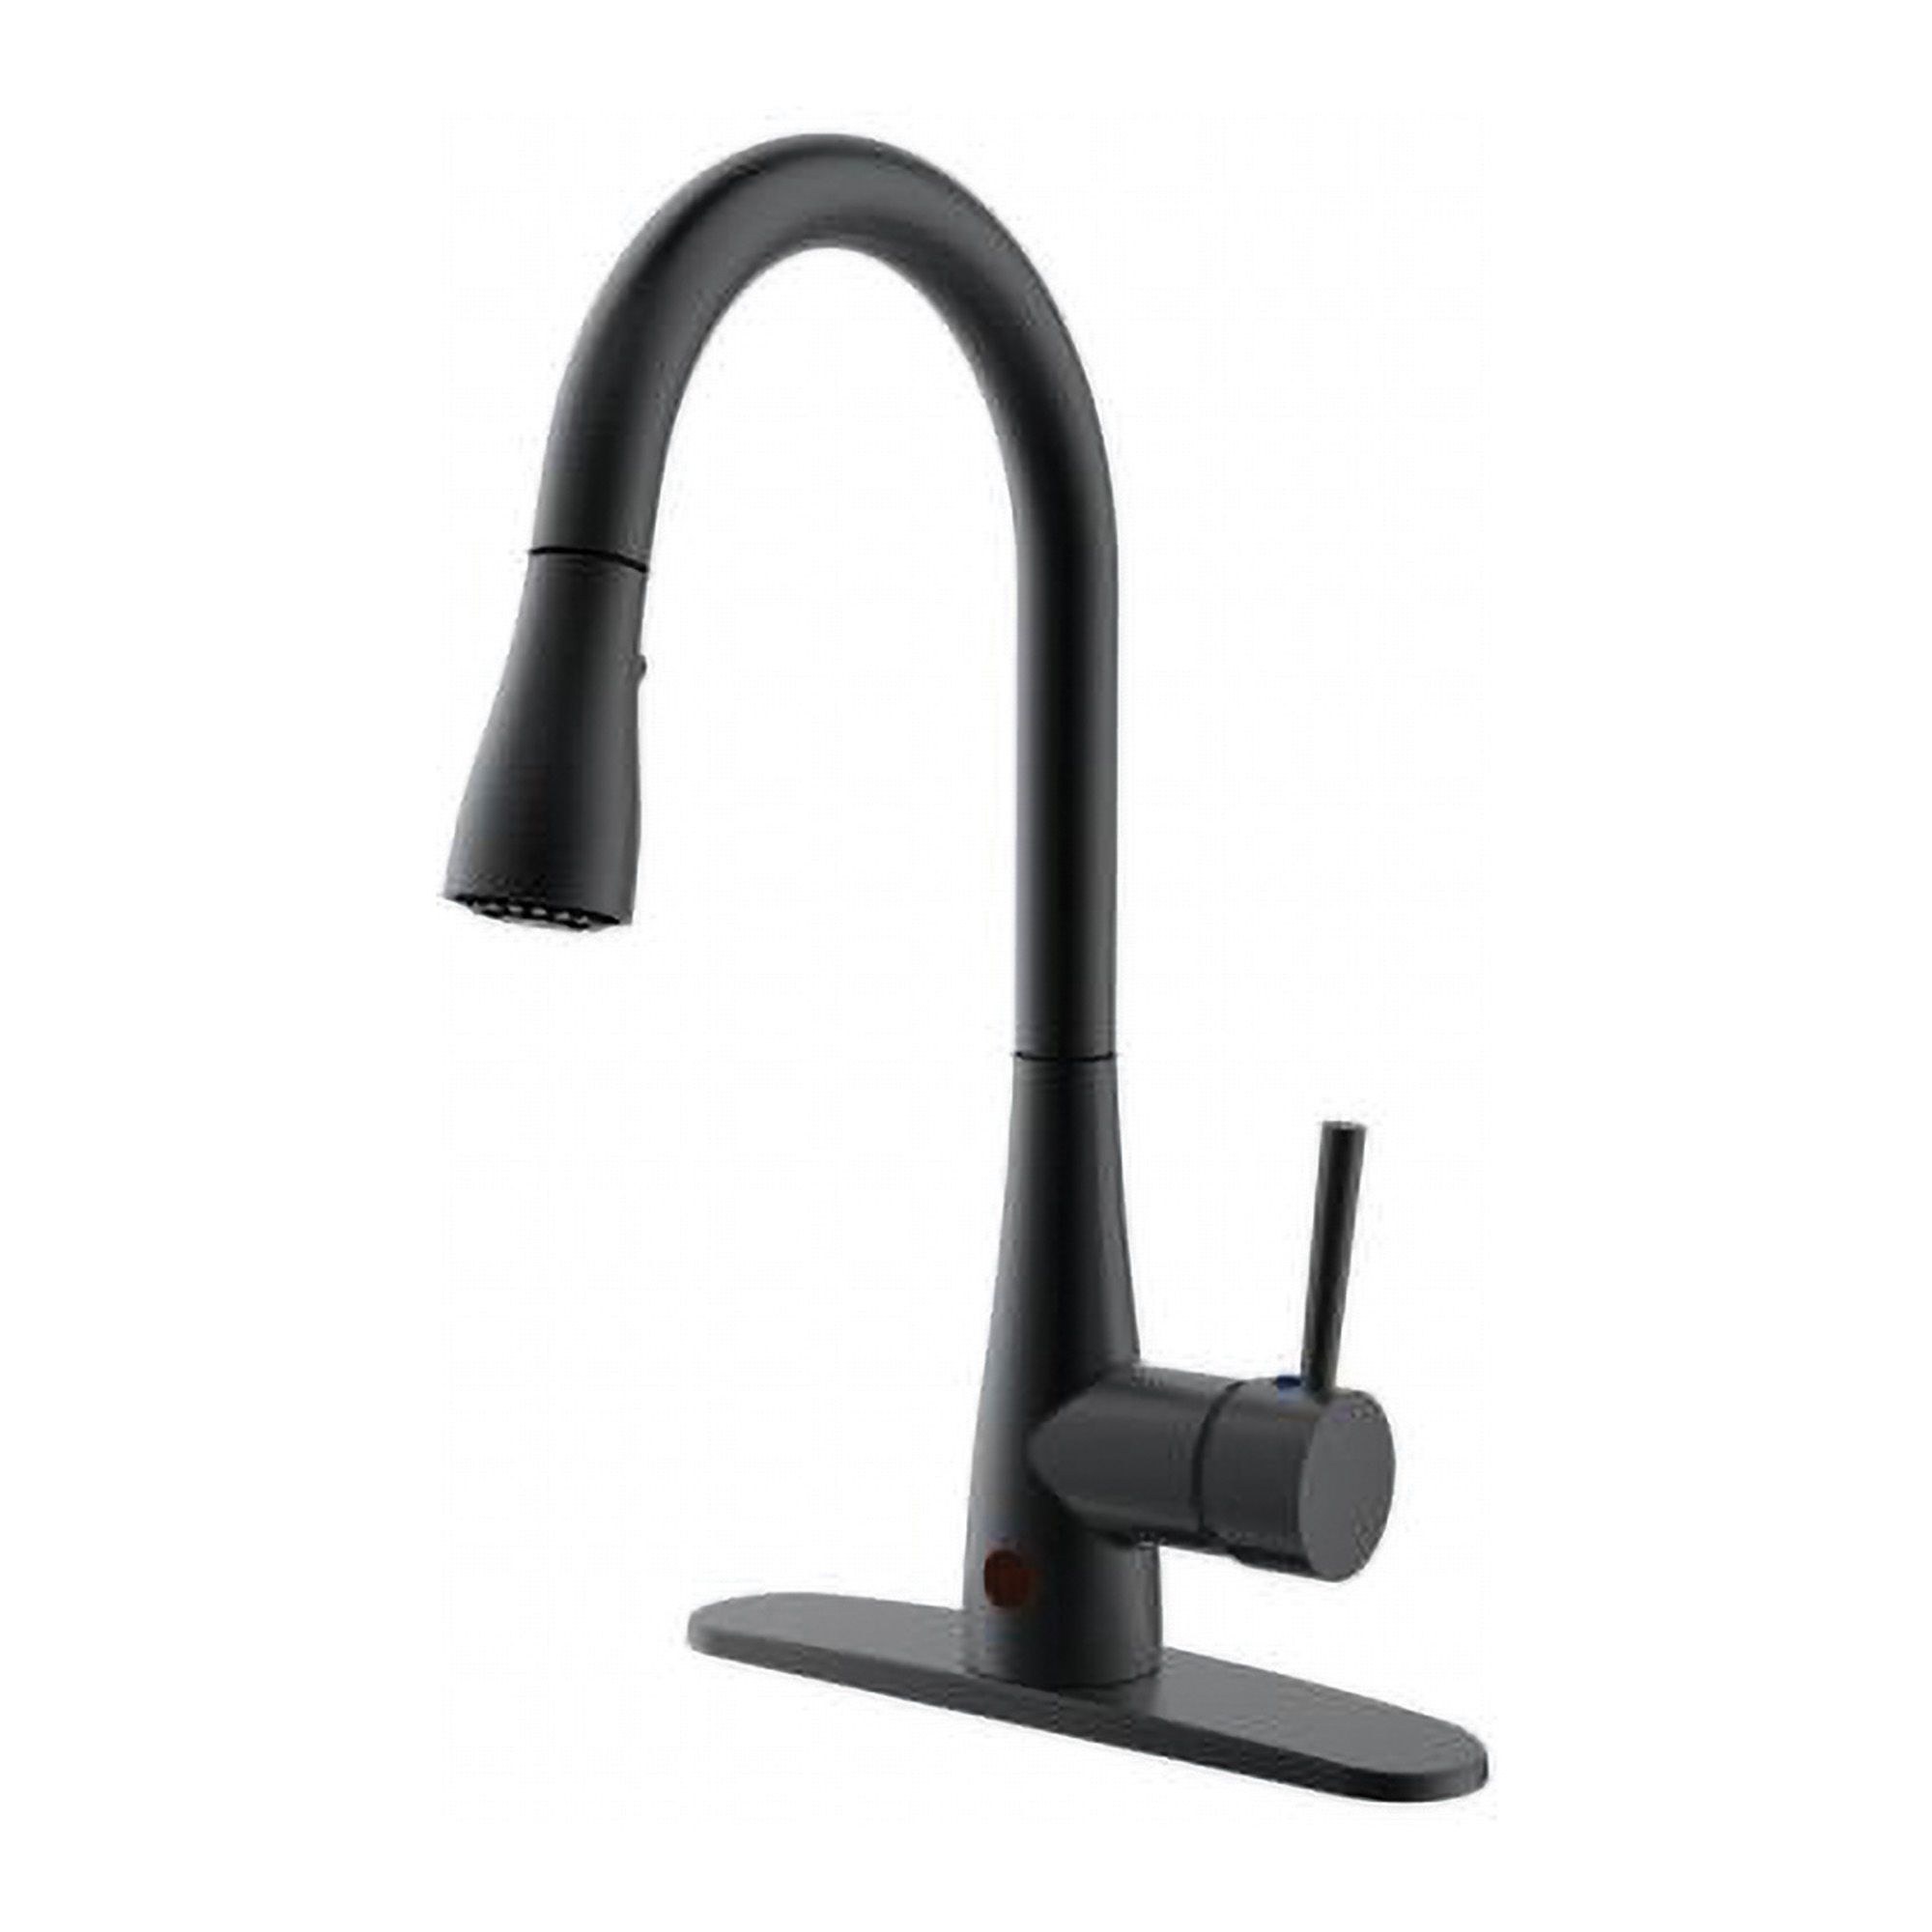 London Kitchen Sink Faucet - Black from RUNFINE INTERNATIONAL